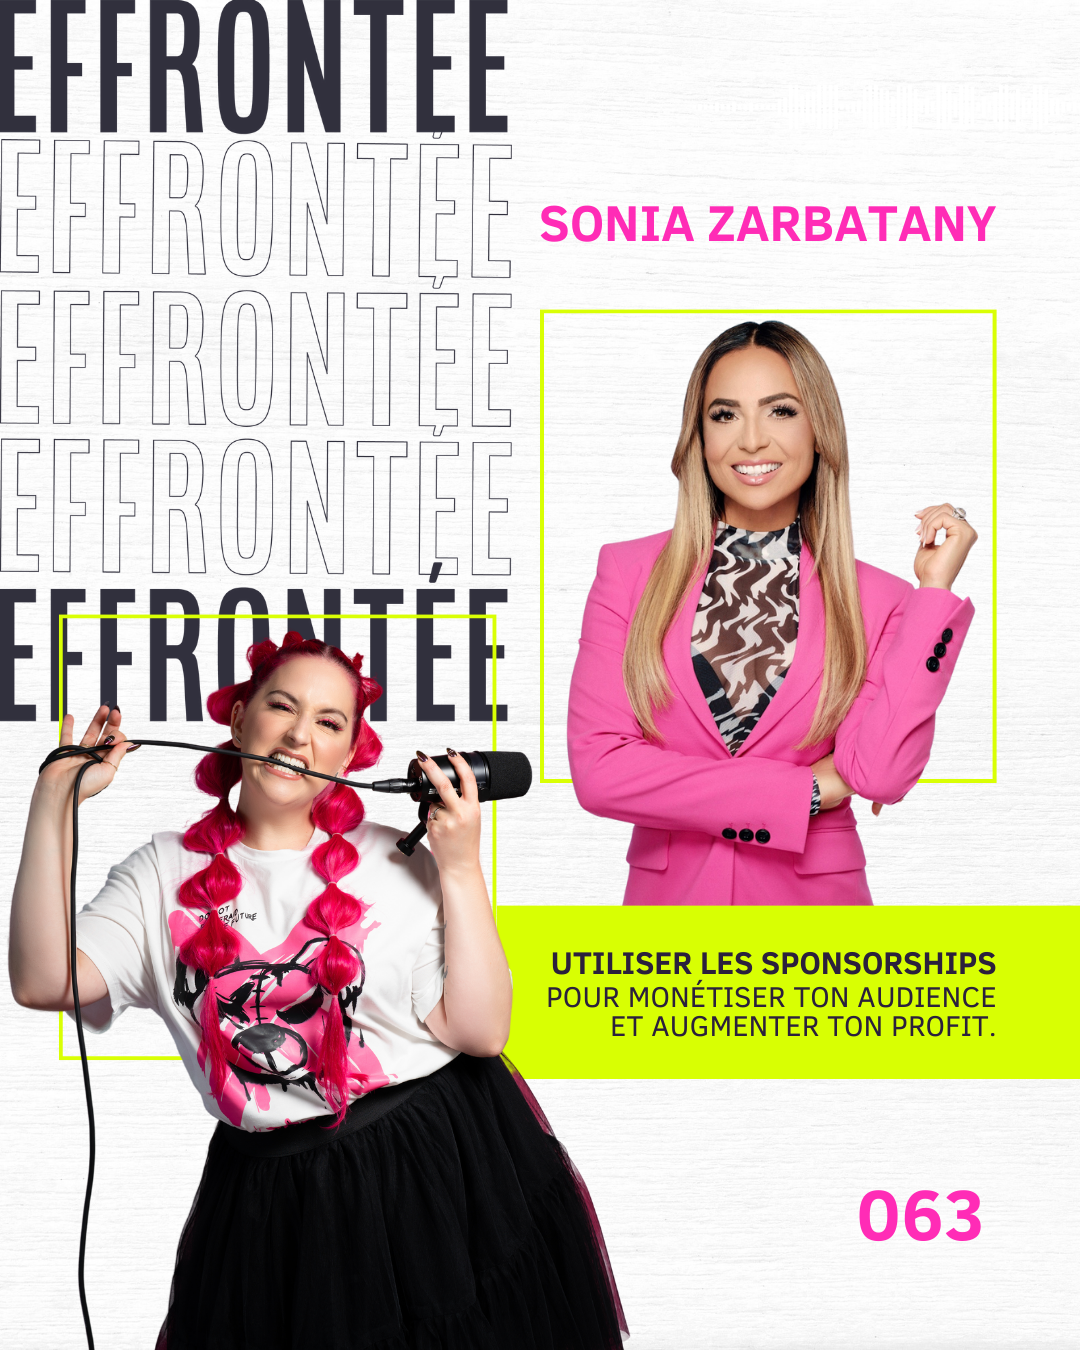 63/ Utiliser les sponsorships pour monétiser ton audience et augmenter ton profit avec Sonia Zarbatany.